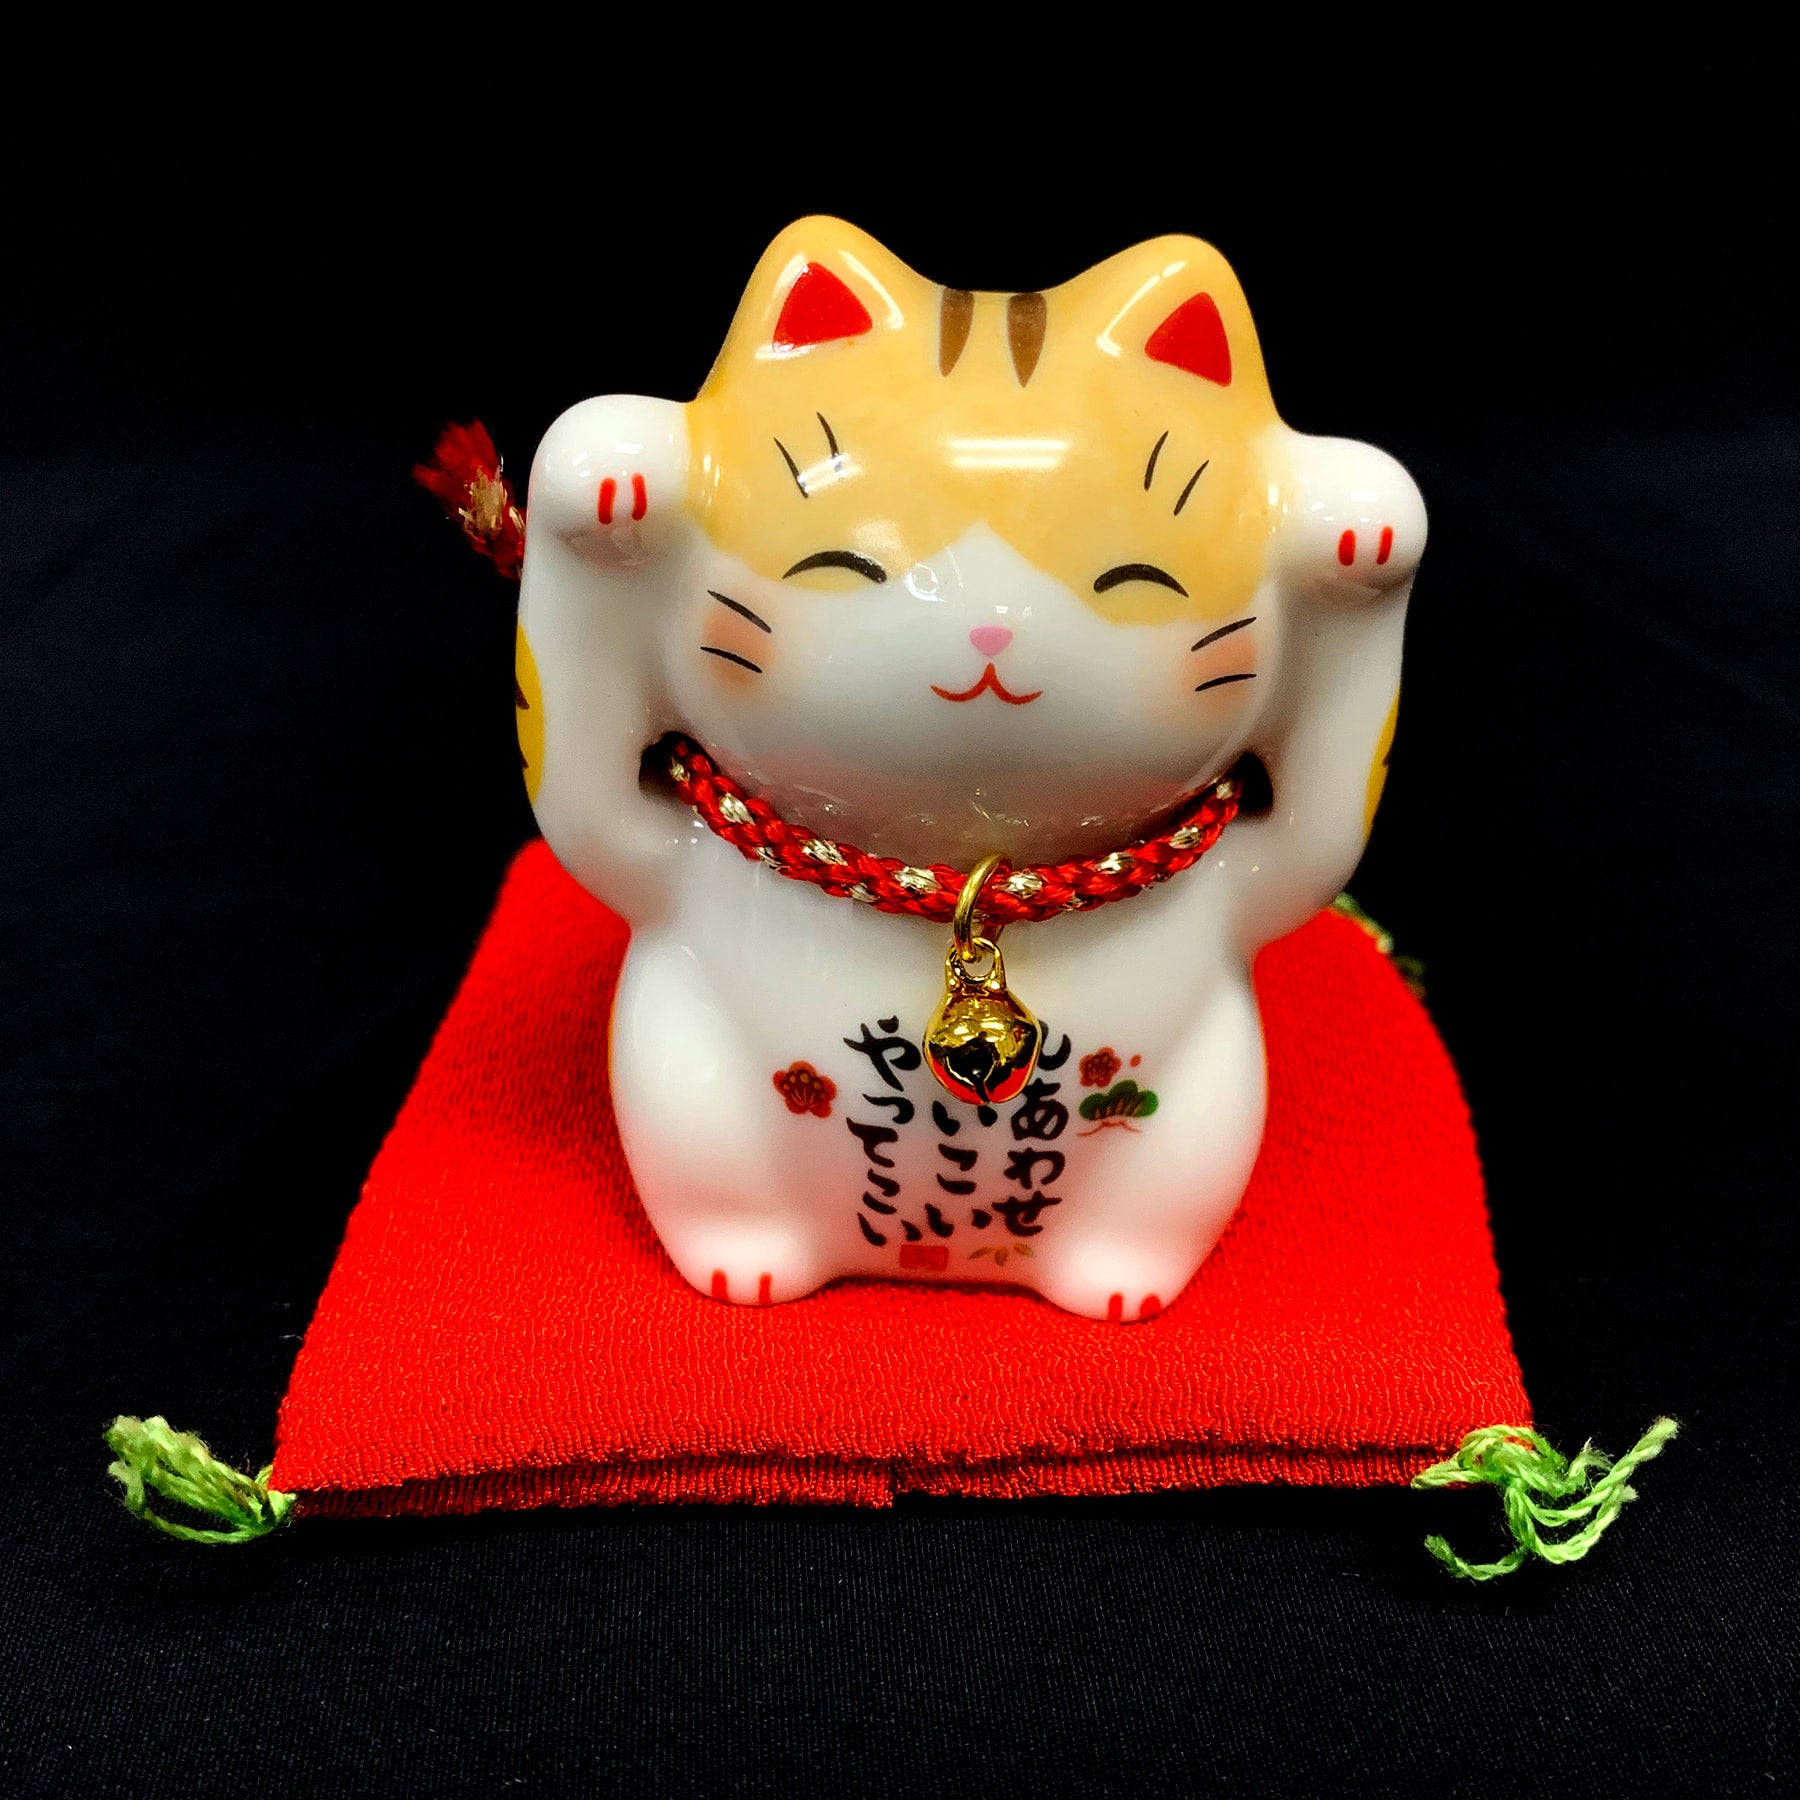 Lucky Cat cookie cutter Maneki-neko beckoning cats paw 招き猫